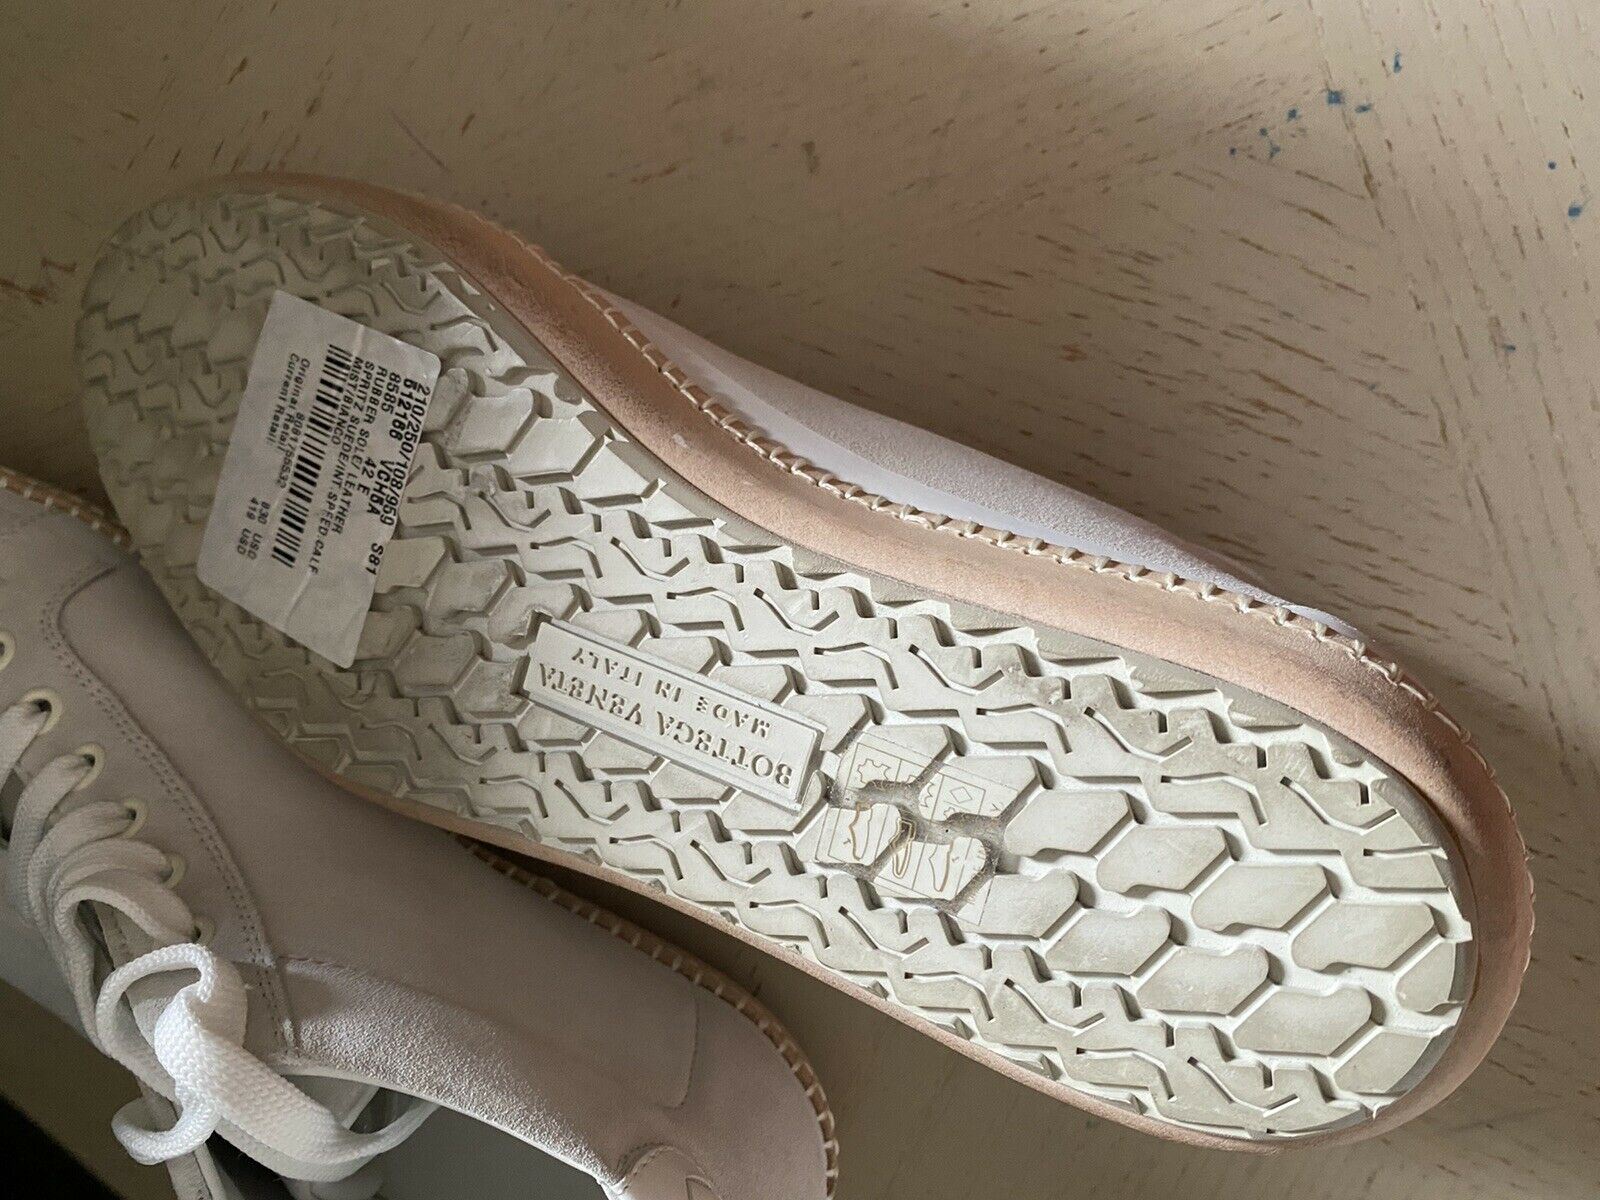 NIB $830 Bottega Veneta Men Suet/Leather Sneaker Shoes Mist/Bianco 9 US/42 Eu